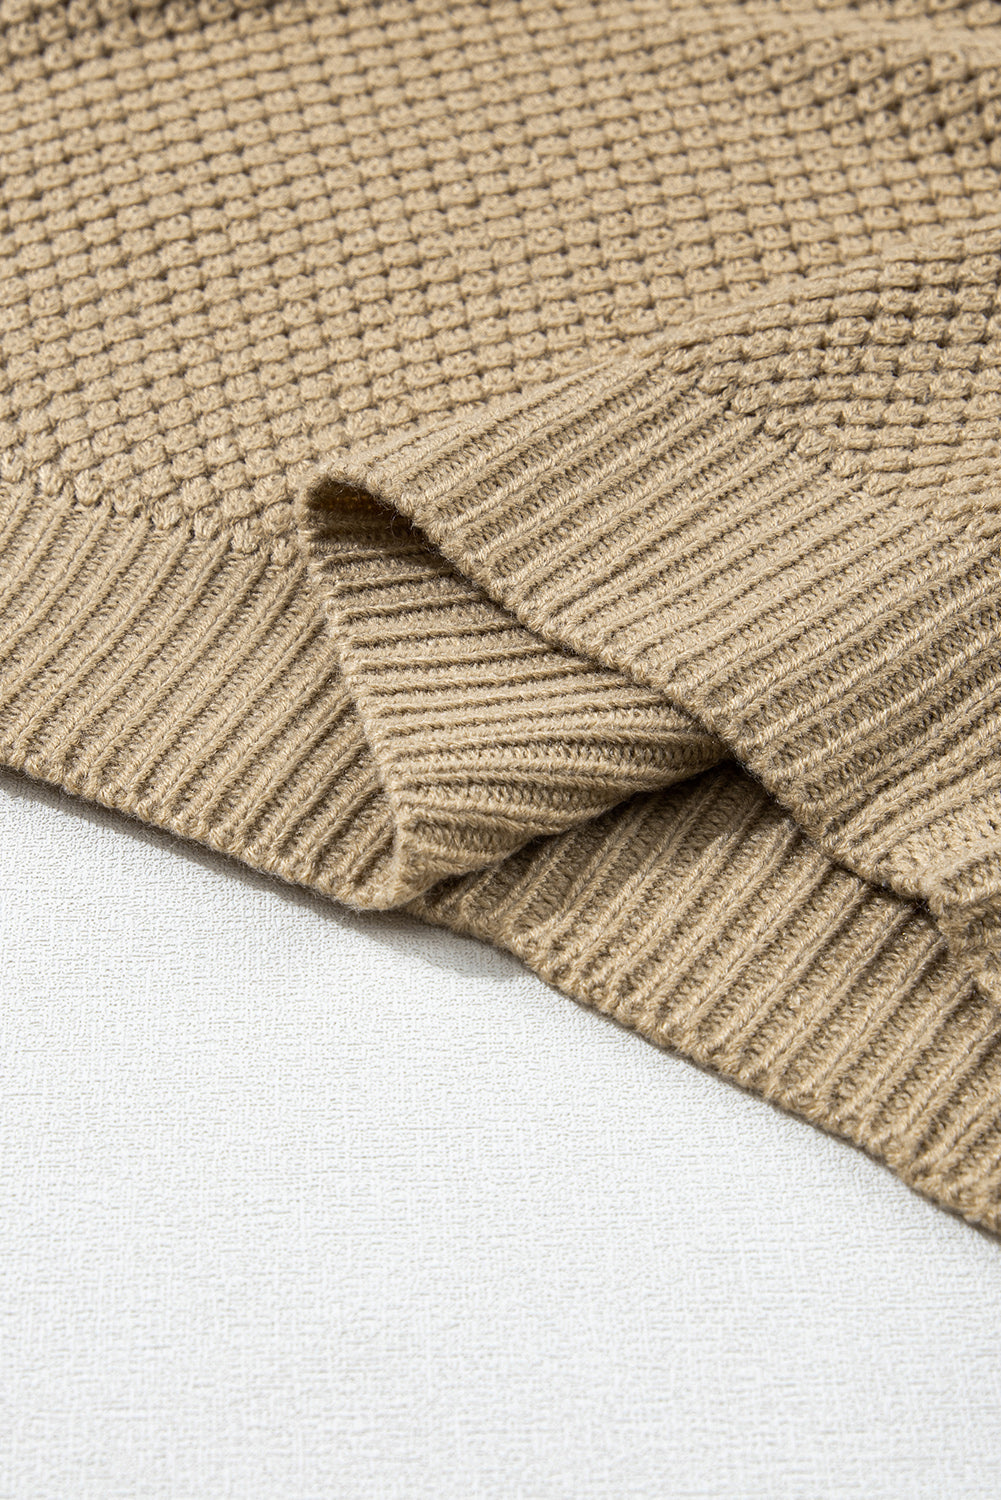 Pale Khaki Turtleneck Textured Short Sleeve Sweater